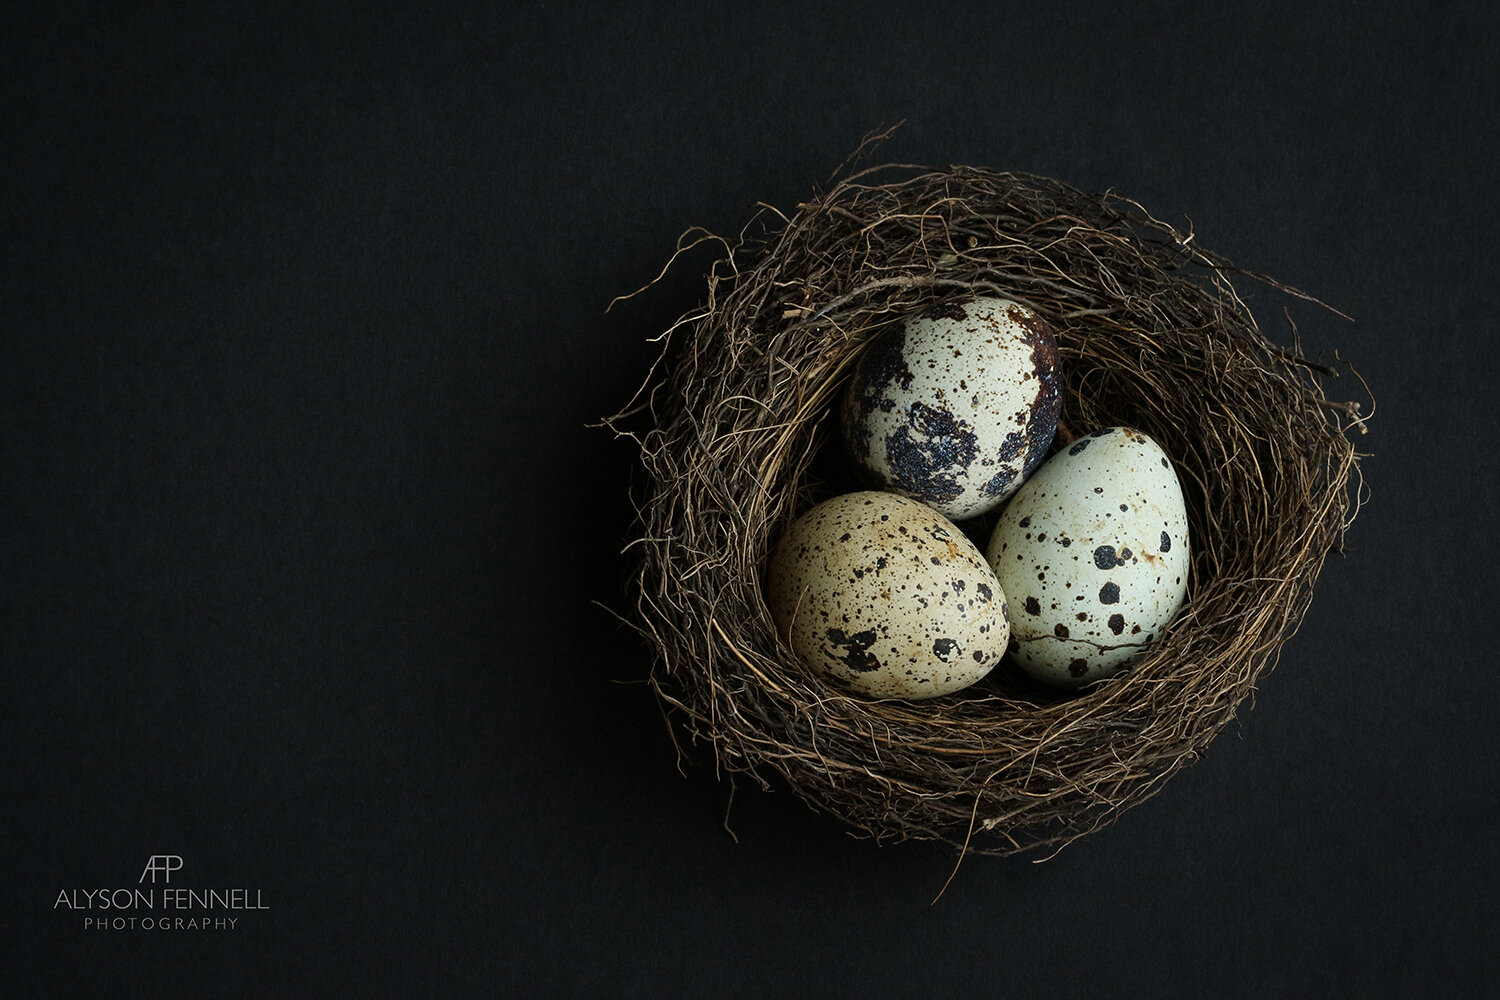 Quails Eggs in a Birds Nest